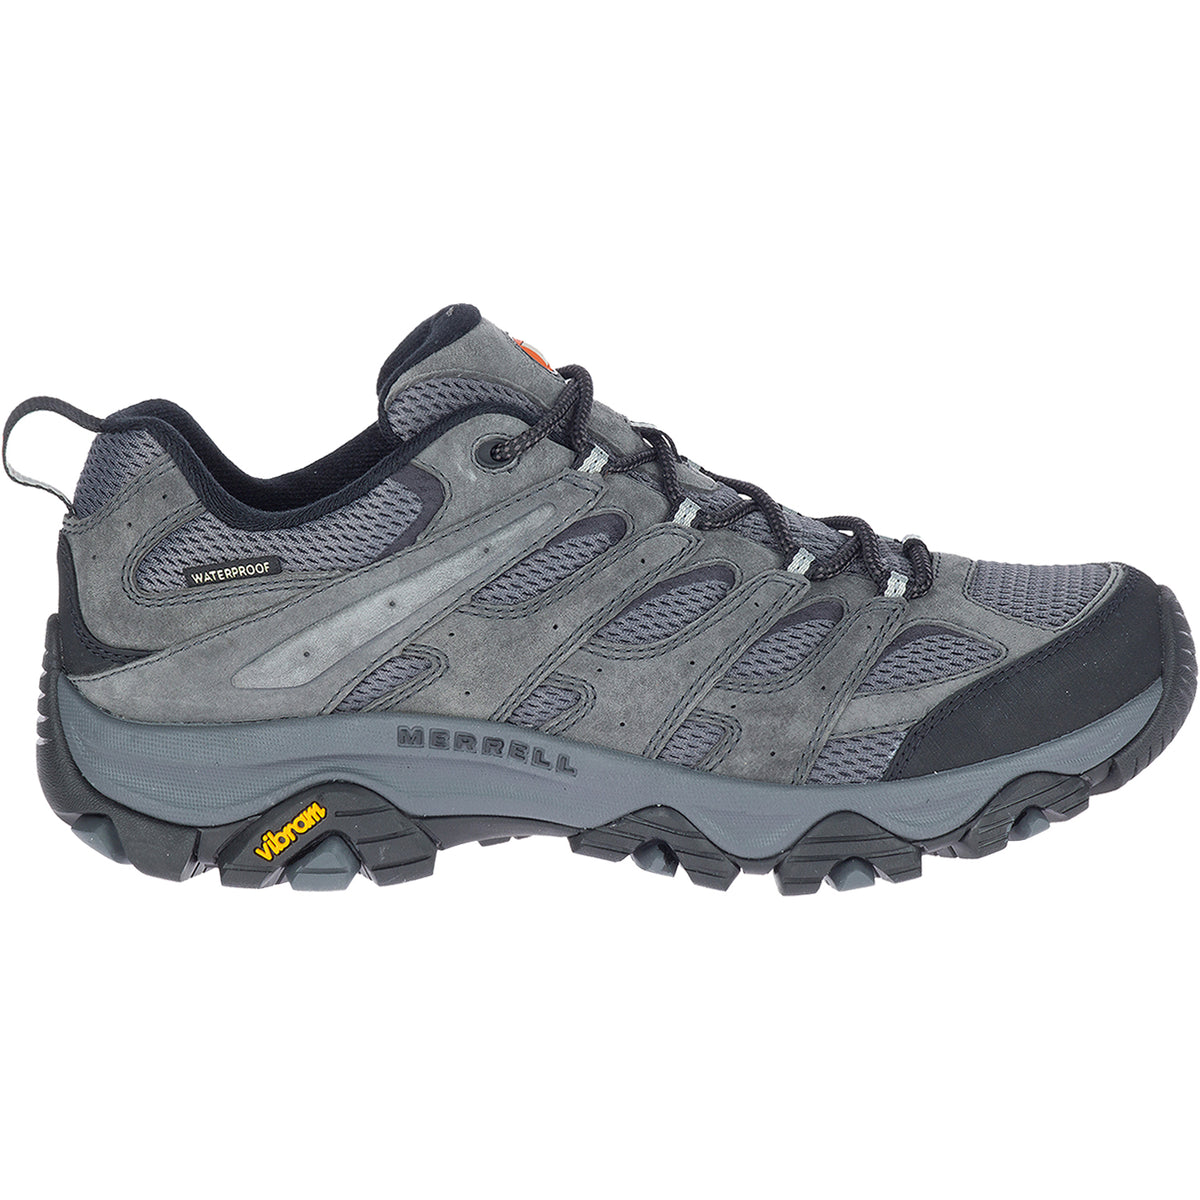 Merrell Moab 3 Waterproof | Men's Hiking Shoes | Footwear etc.